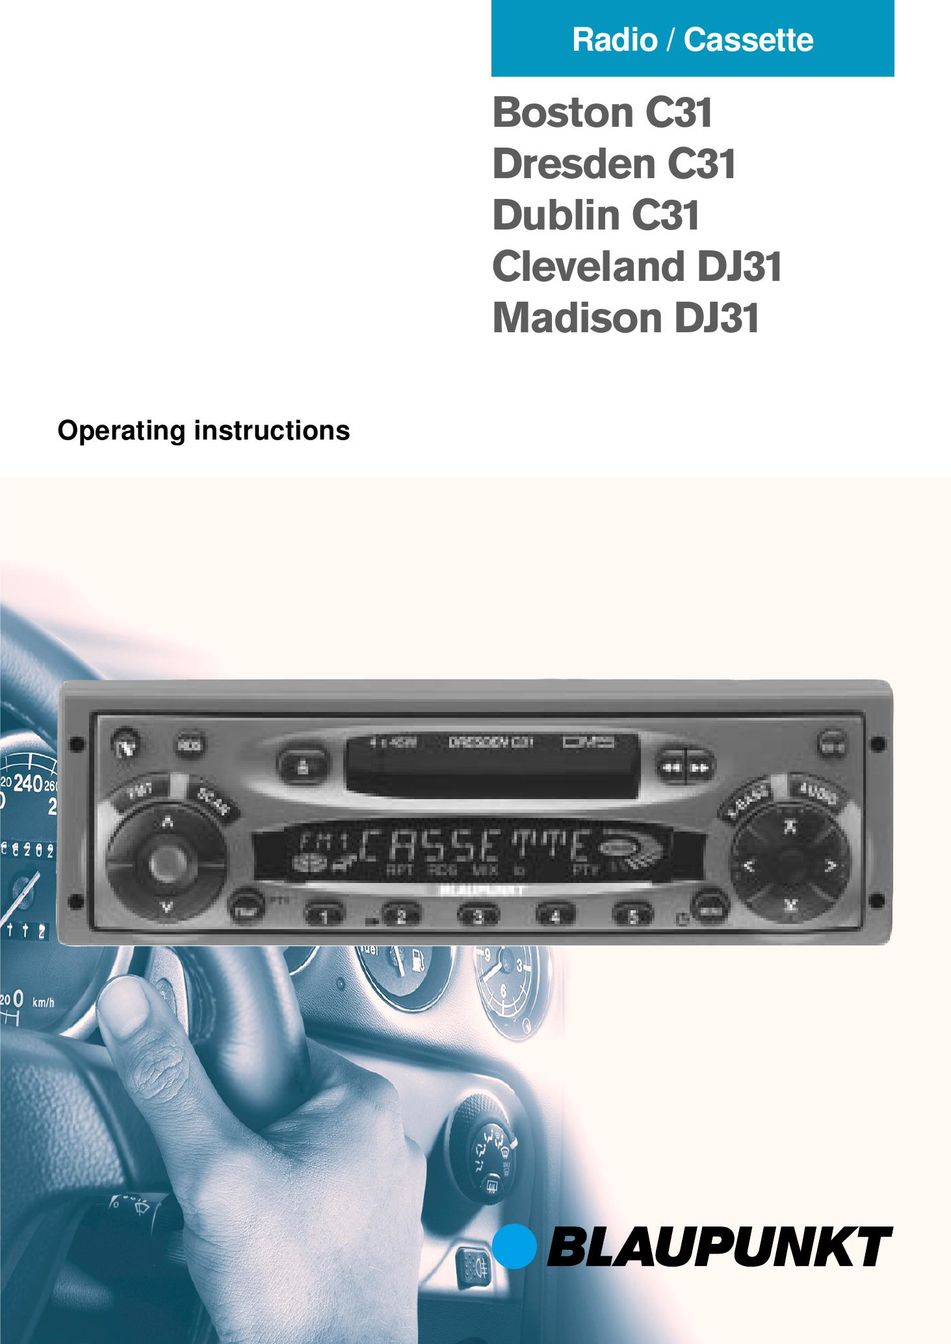 Blaupunkt Dublin C31 Portable Radio User Manual